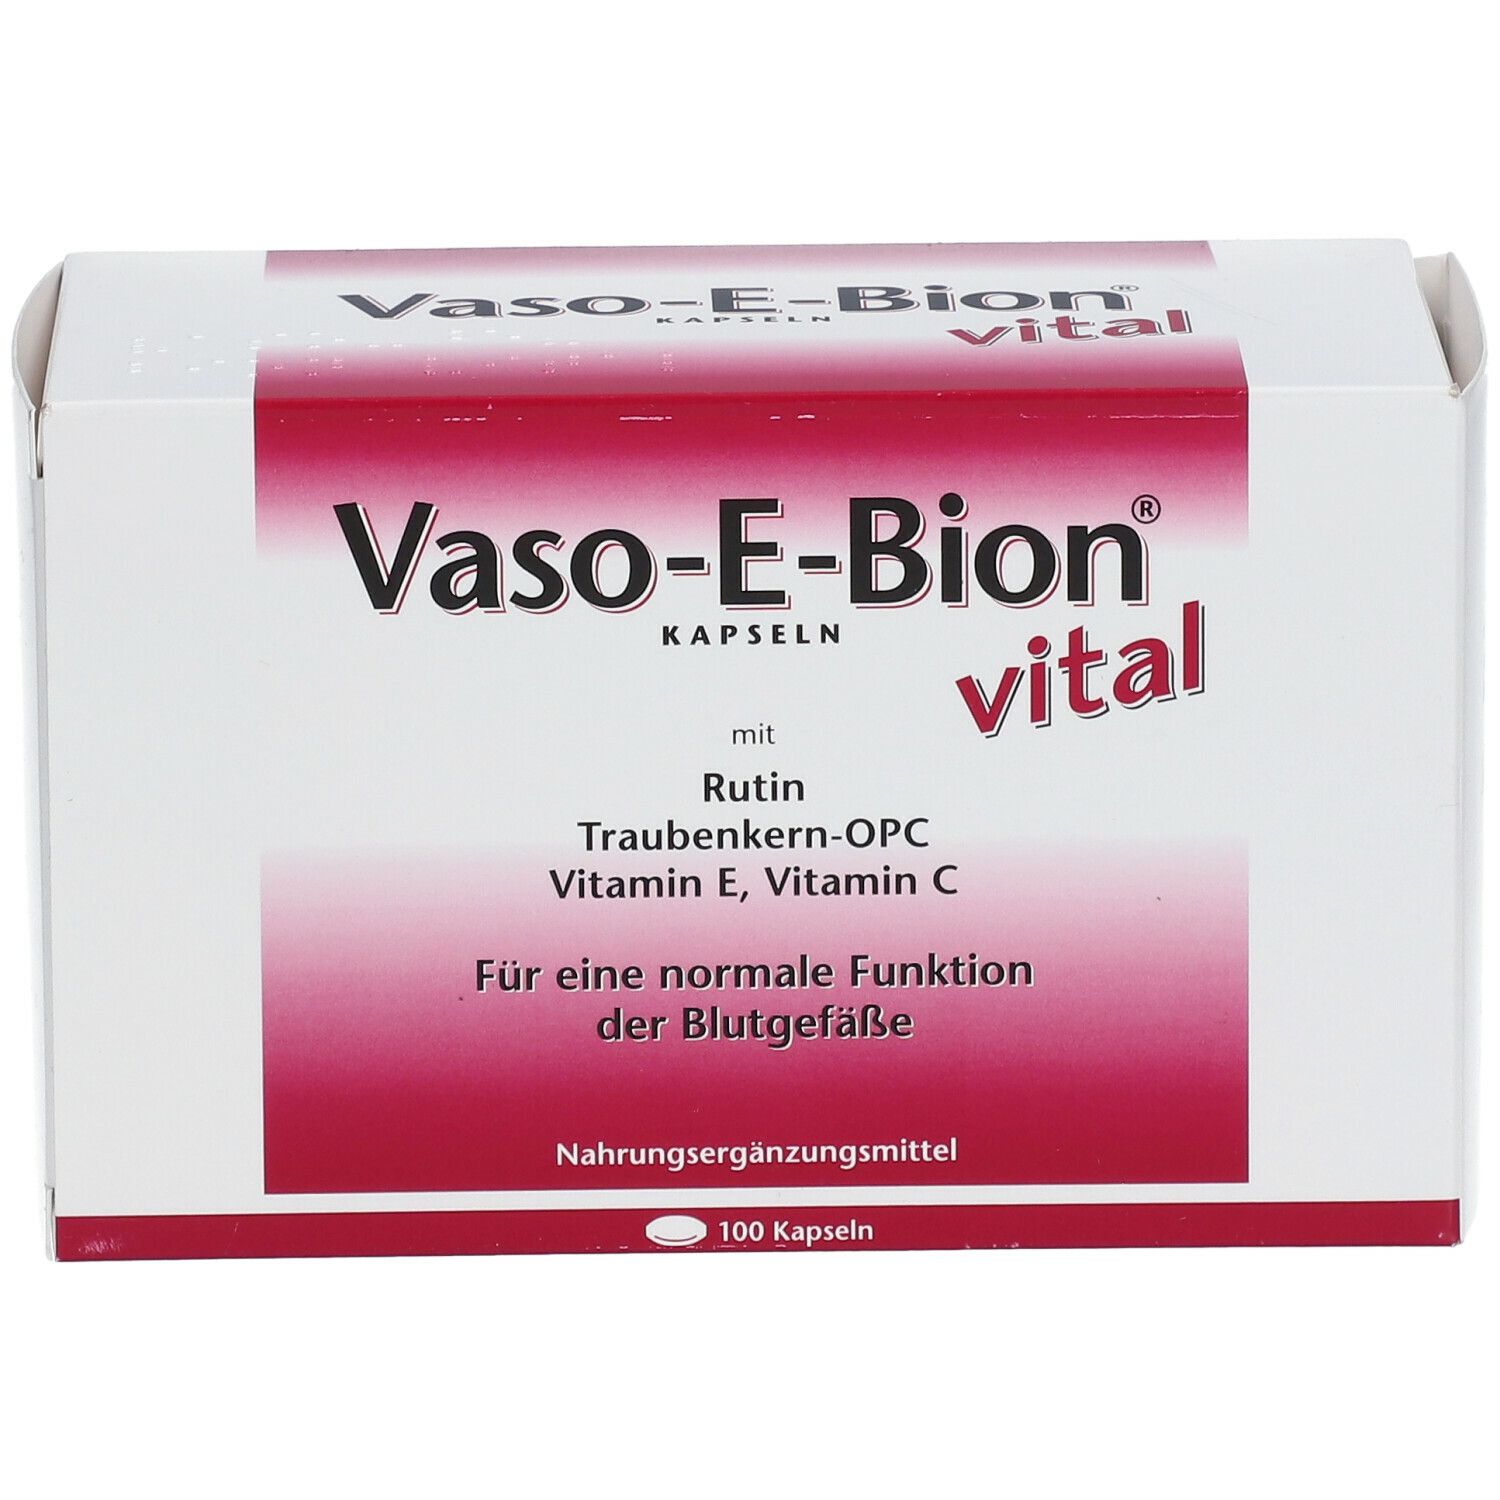 Vaso-E-Bion® vital